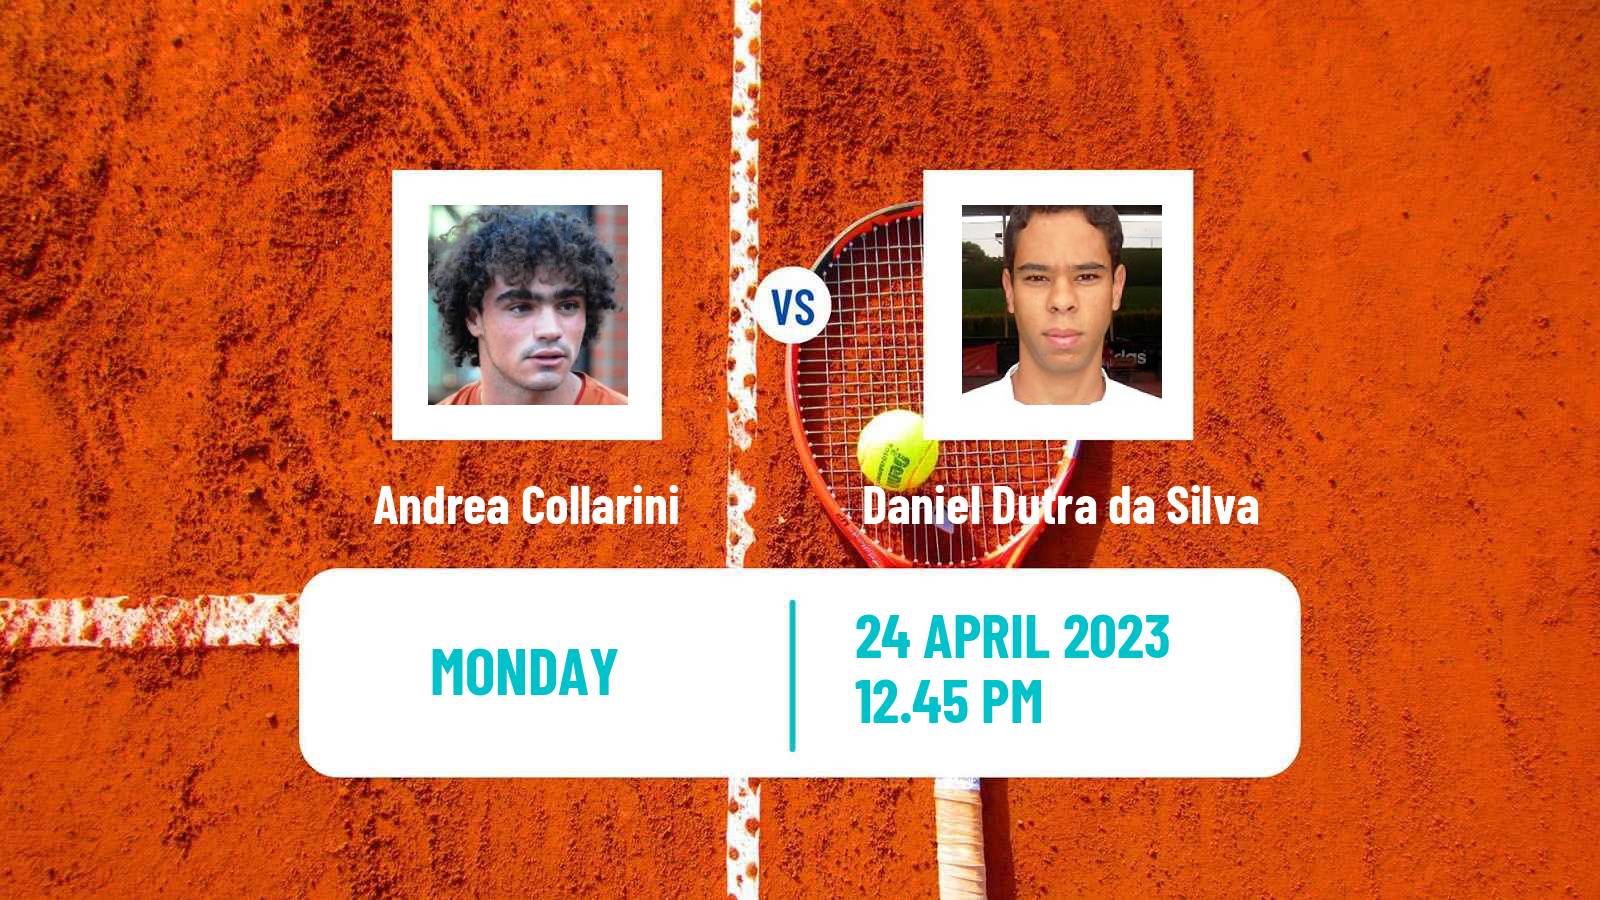 Tennis ATP Challenger Andrea Collarini - Daniel Dutra da Silva